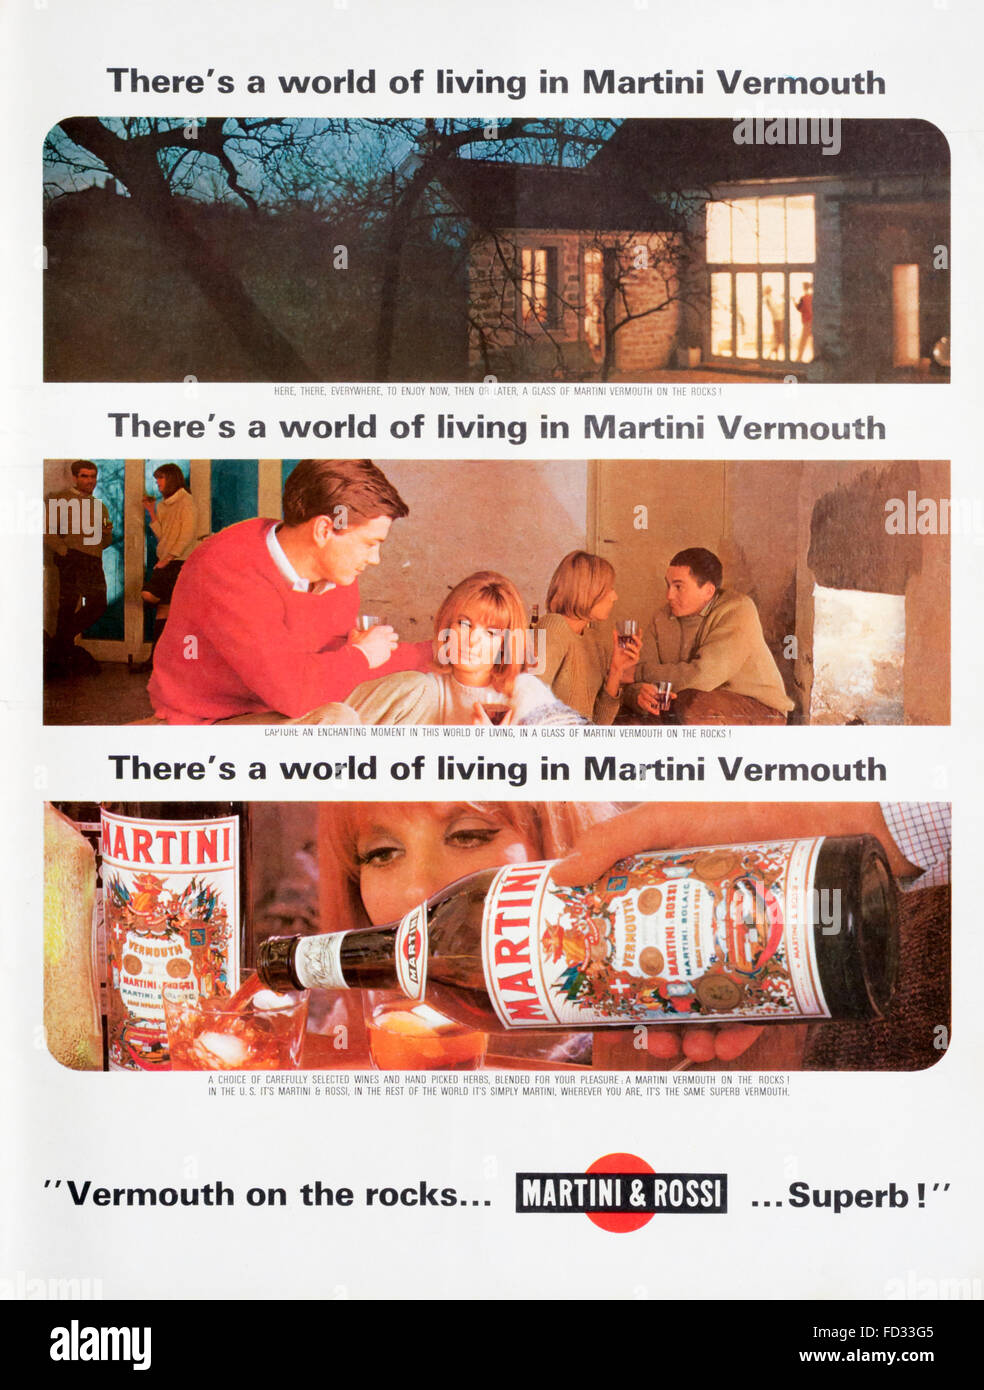 1960s magazine advertisement advertising Martini & Rossi Vermouth. Stock Photo